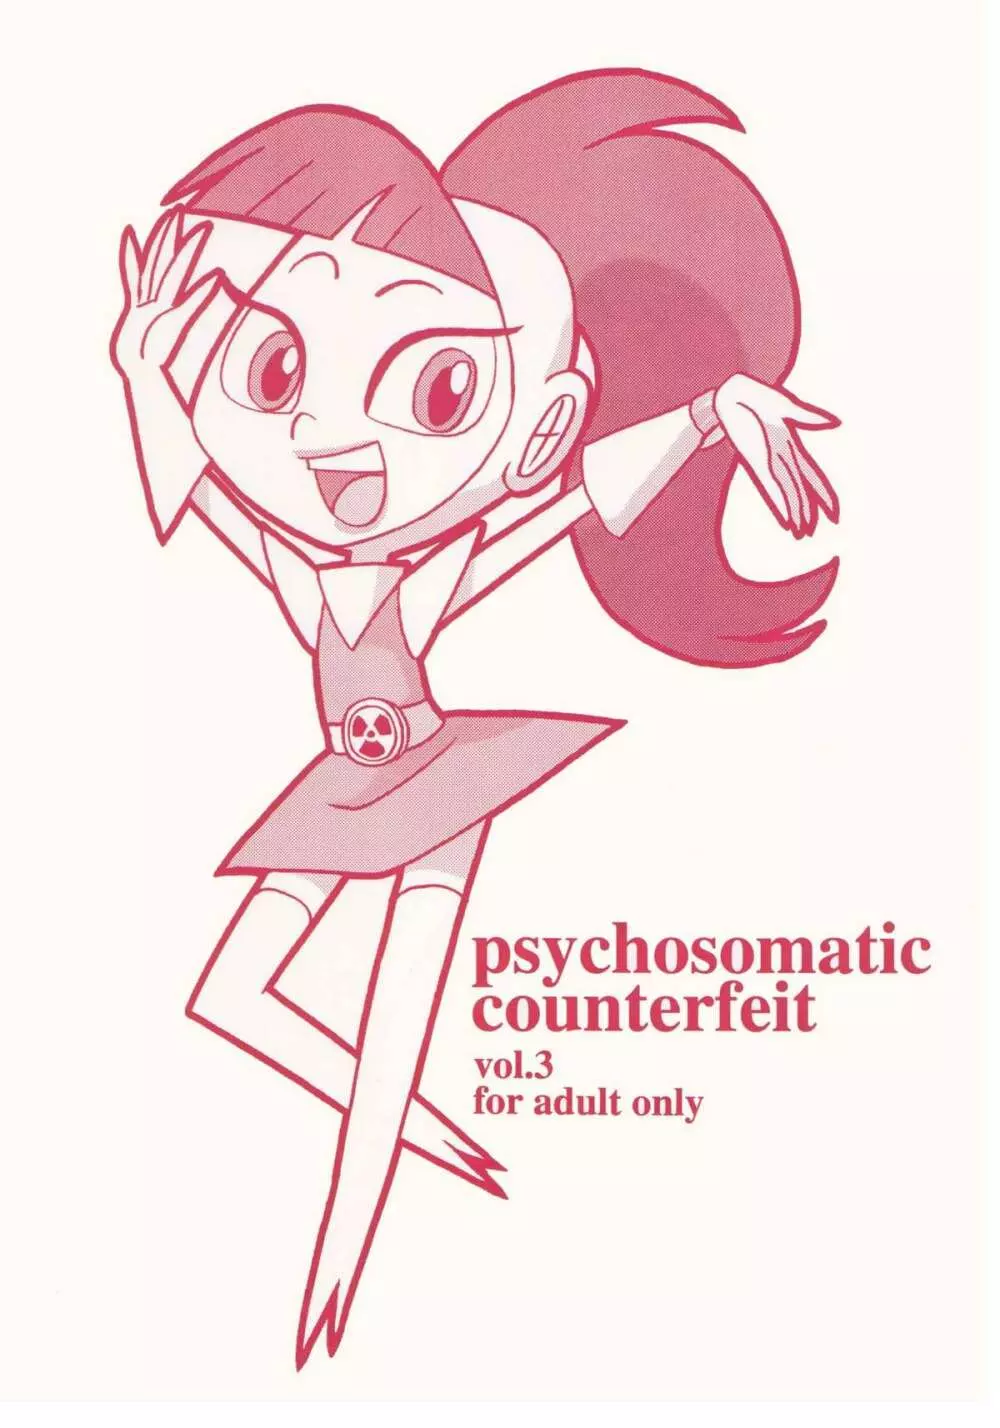 psychosomatic counterfeit vol.3